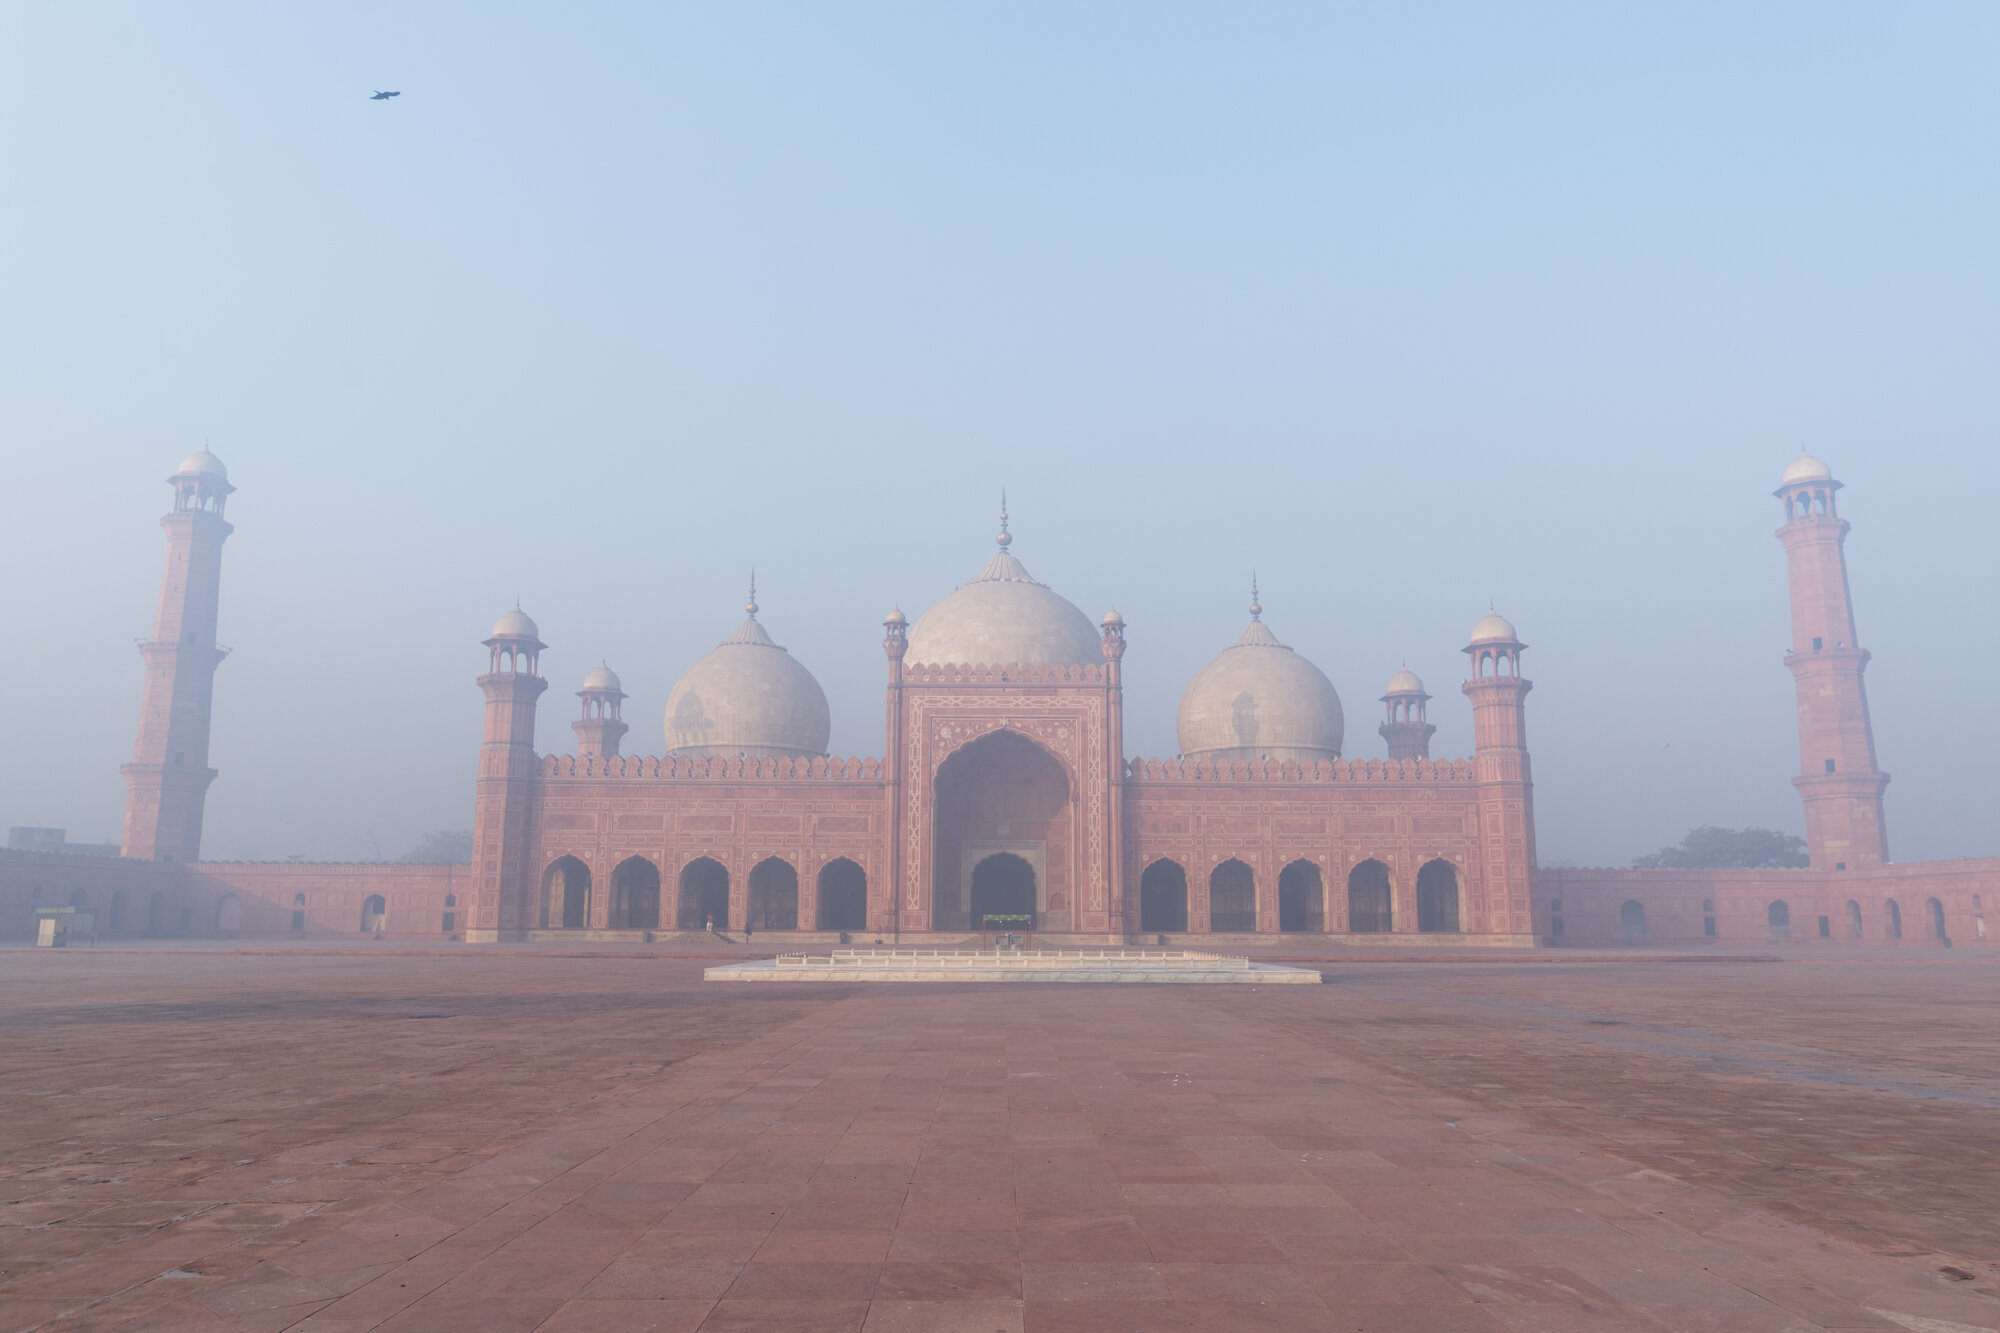  The Badshahi Mosque built by the Mughal emperor Aurangzeb 